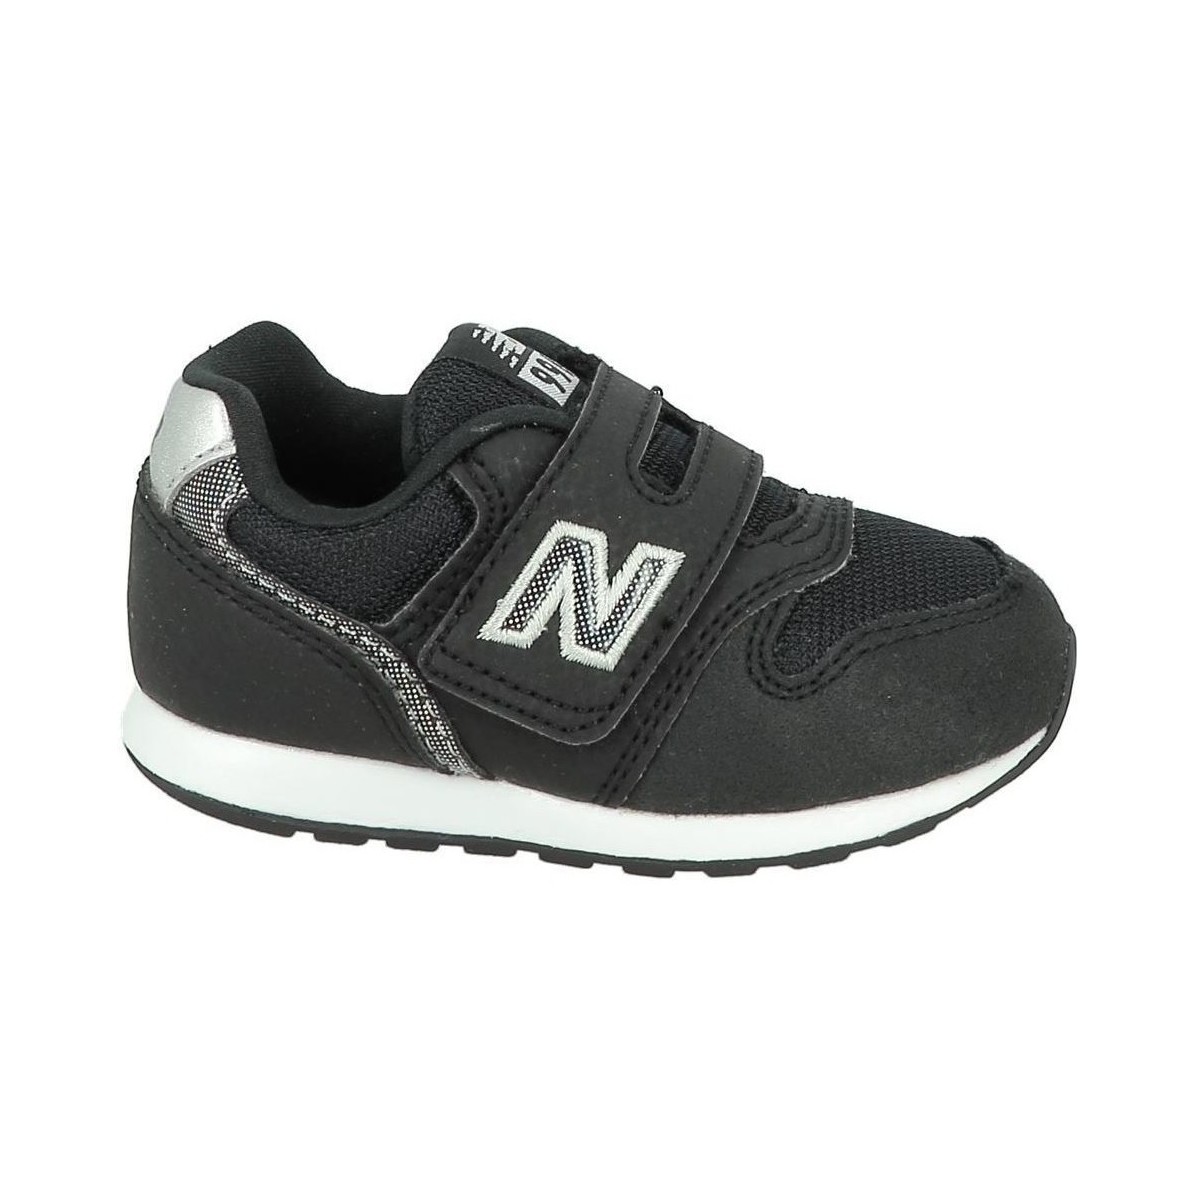 Chaussures Garçon New Balance Numeric NM379 Standard Mens IZ996 M Noir